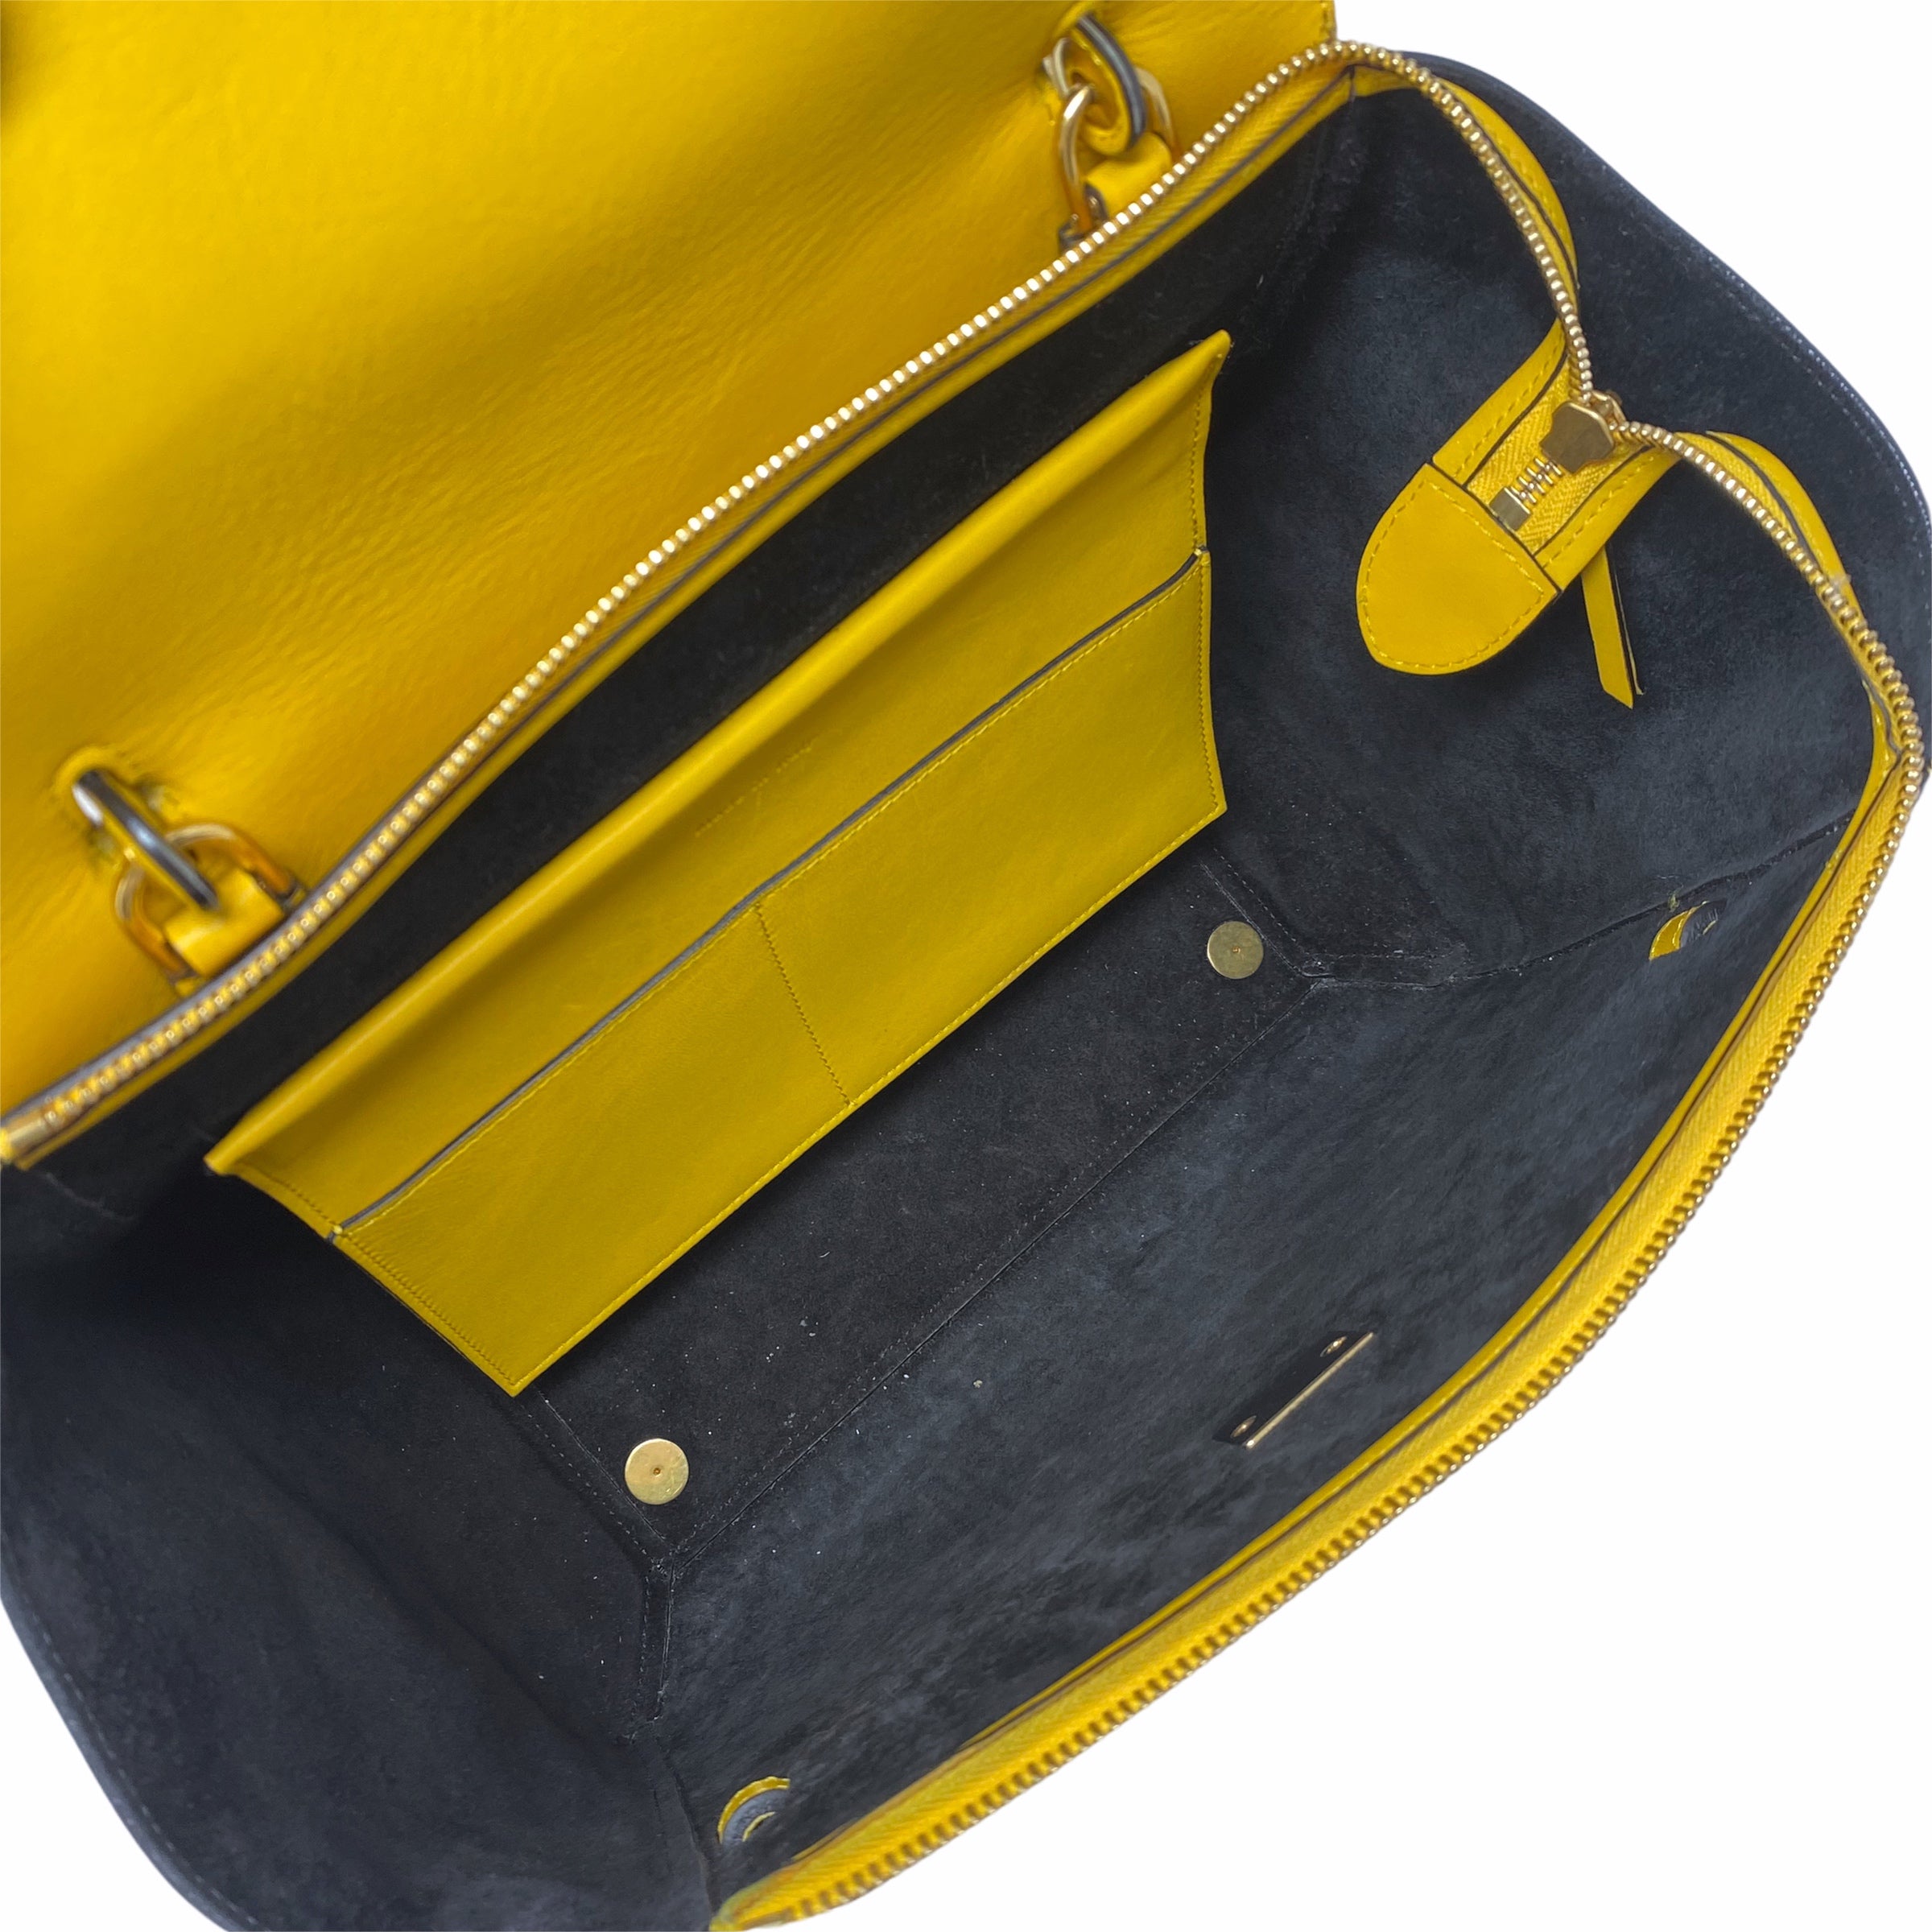 Celine Yellow Mini Belt Bag